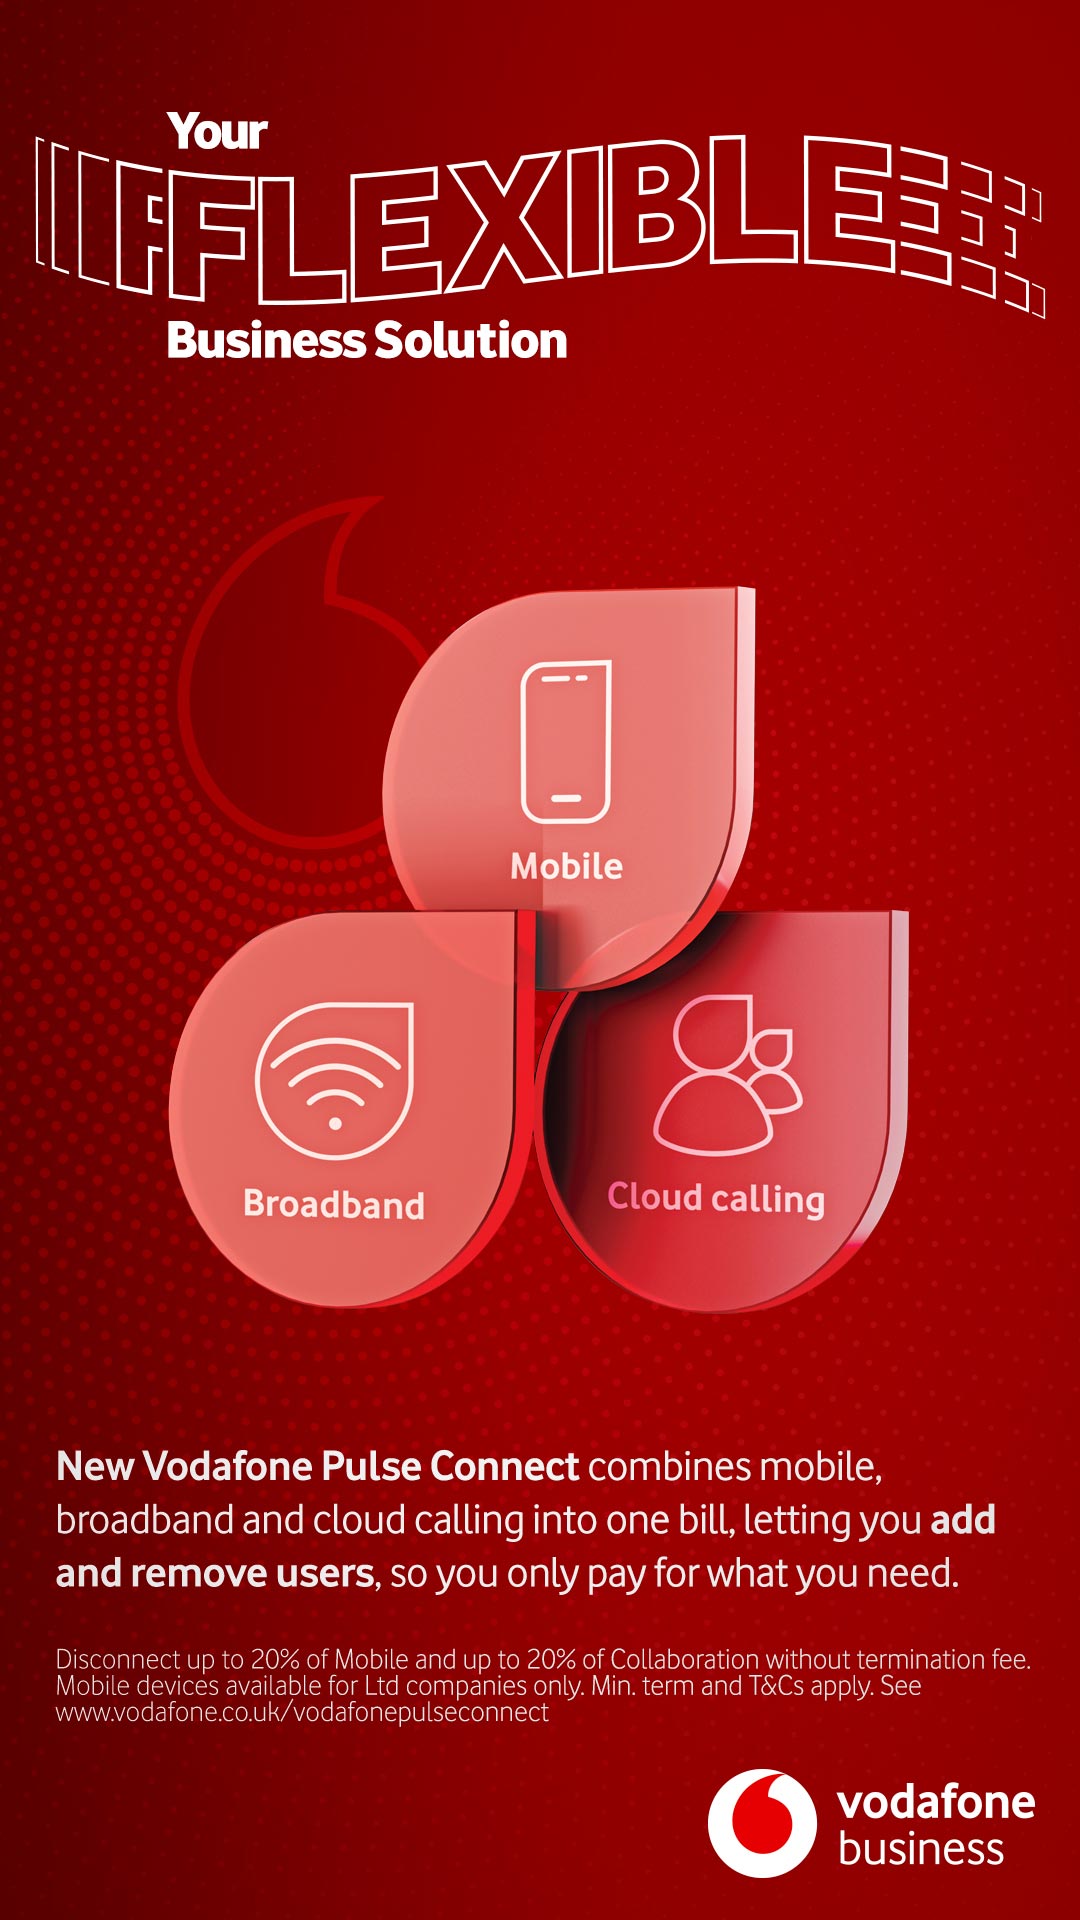 Vodafone: Your flexible business solution